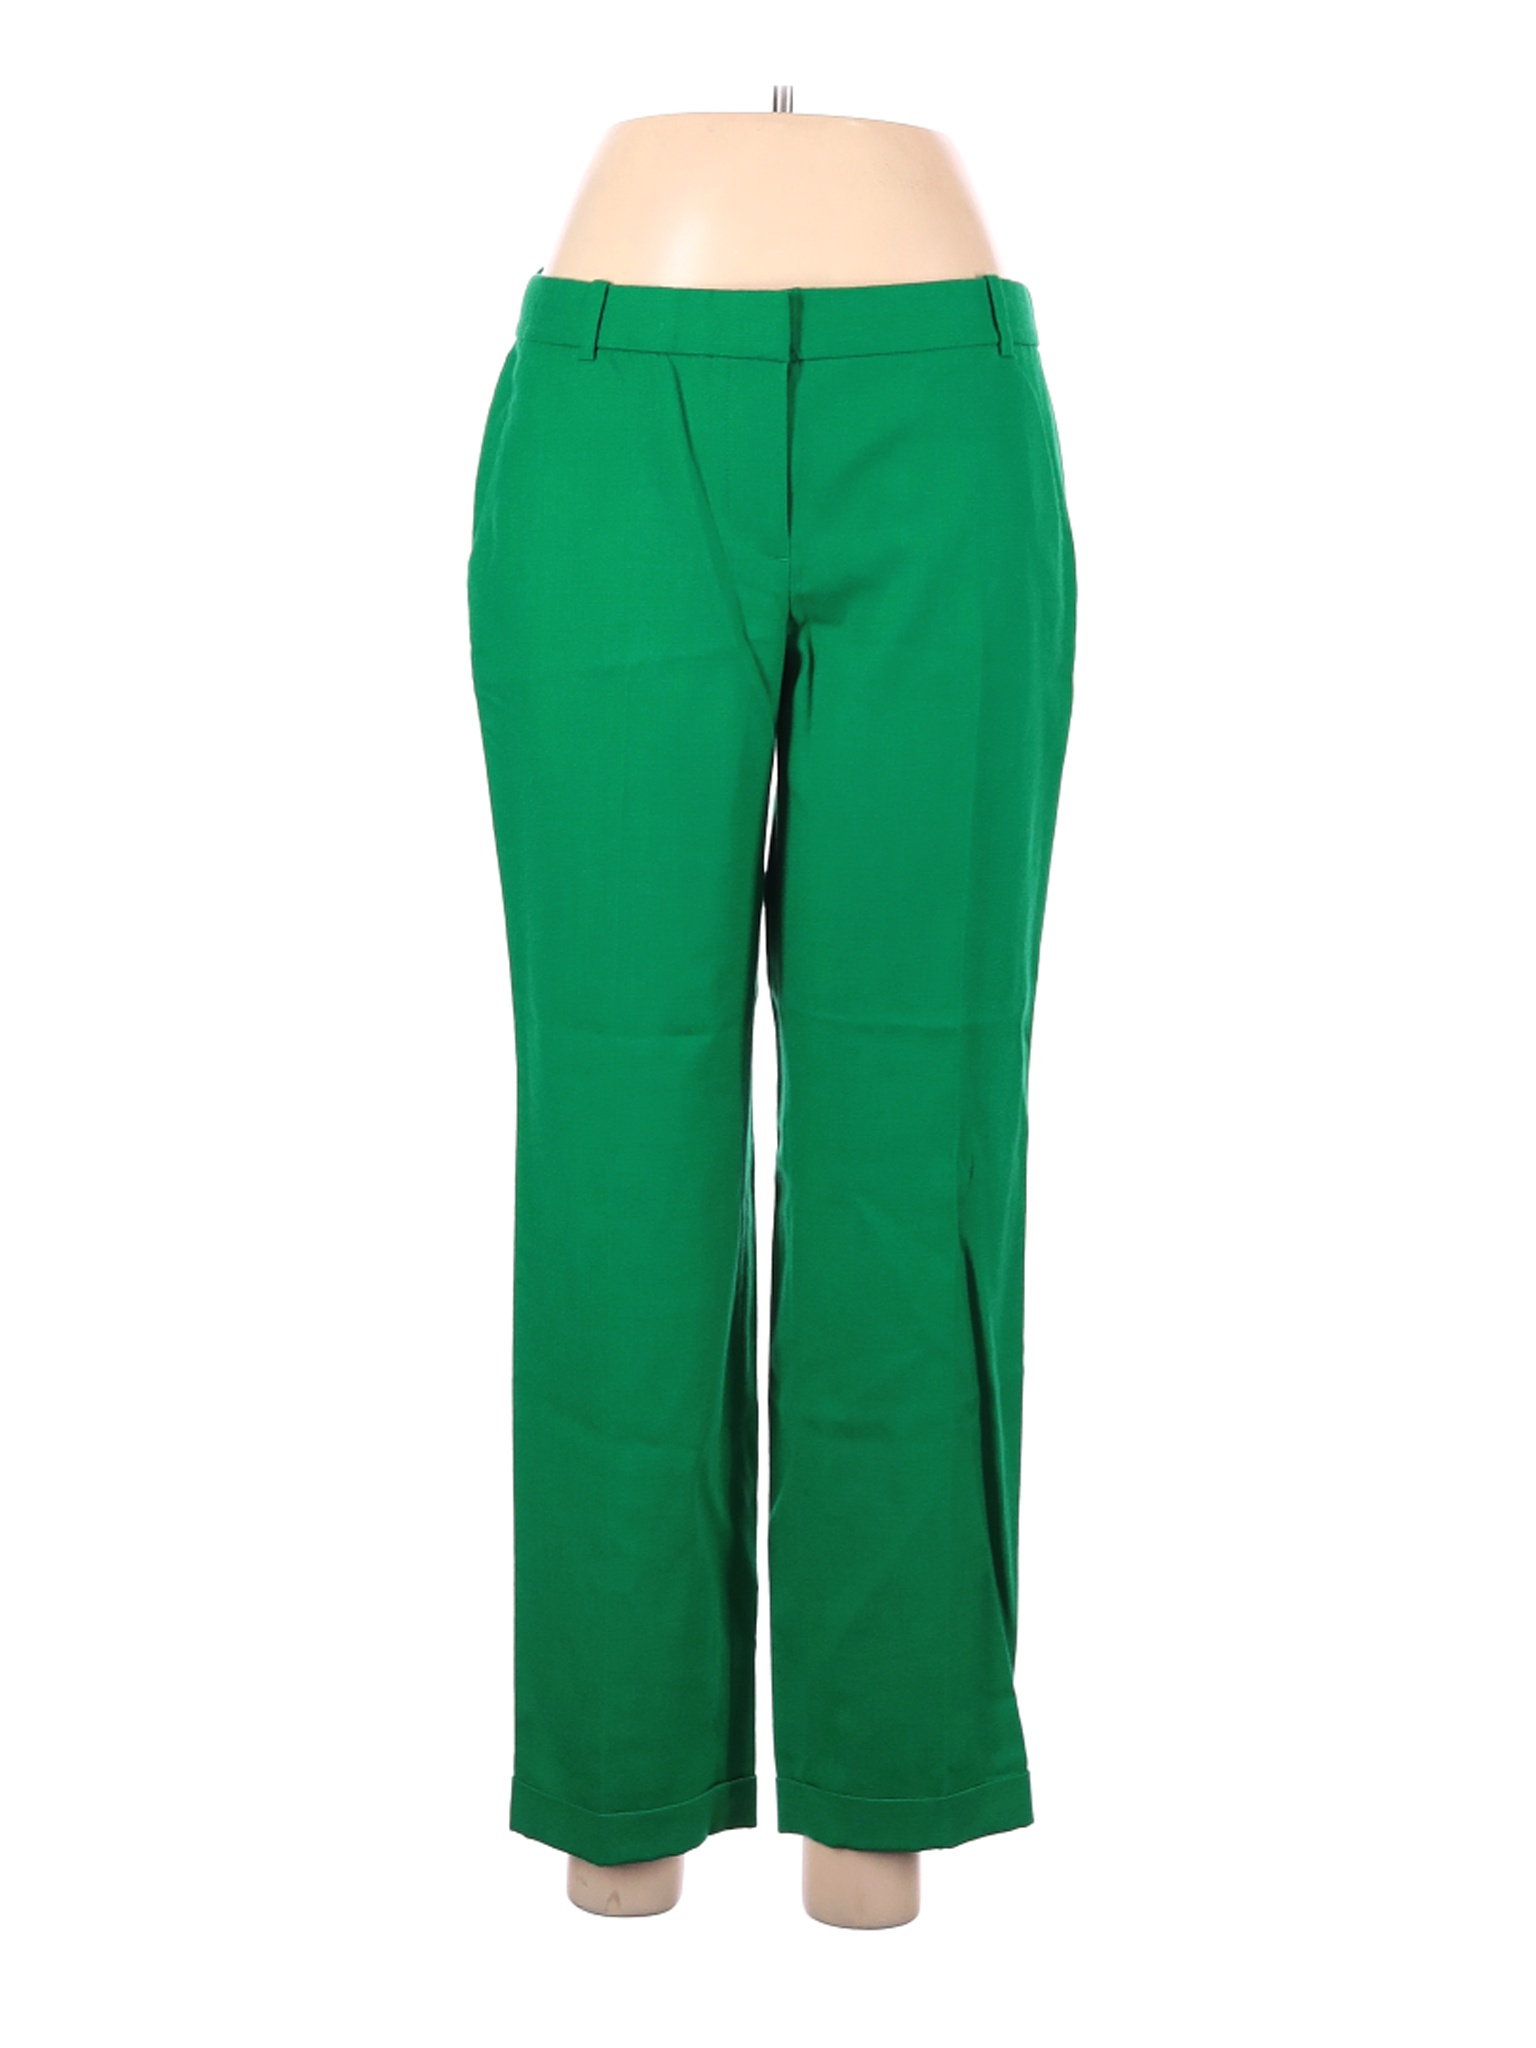 J.Crew Women Green Wool Pants 6 | eBay